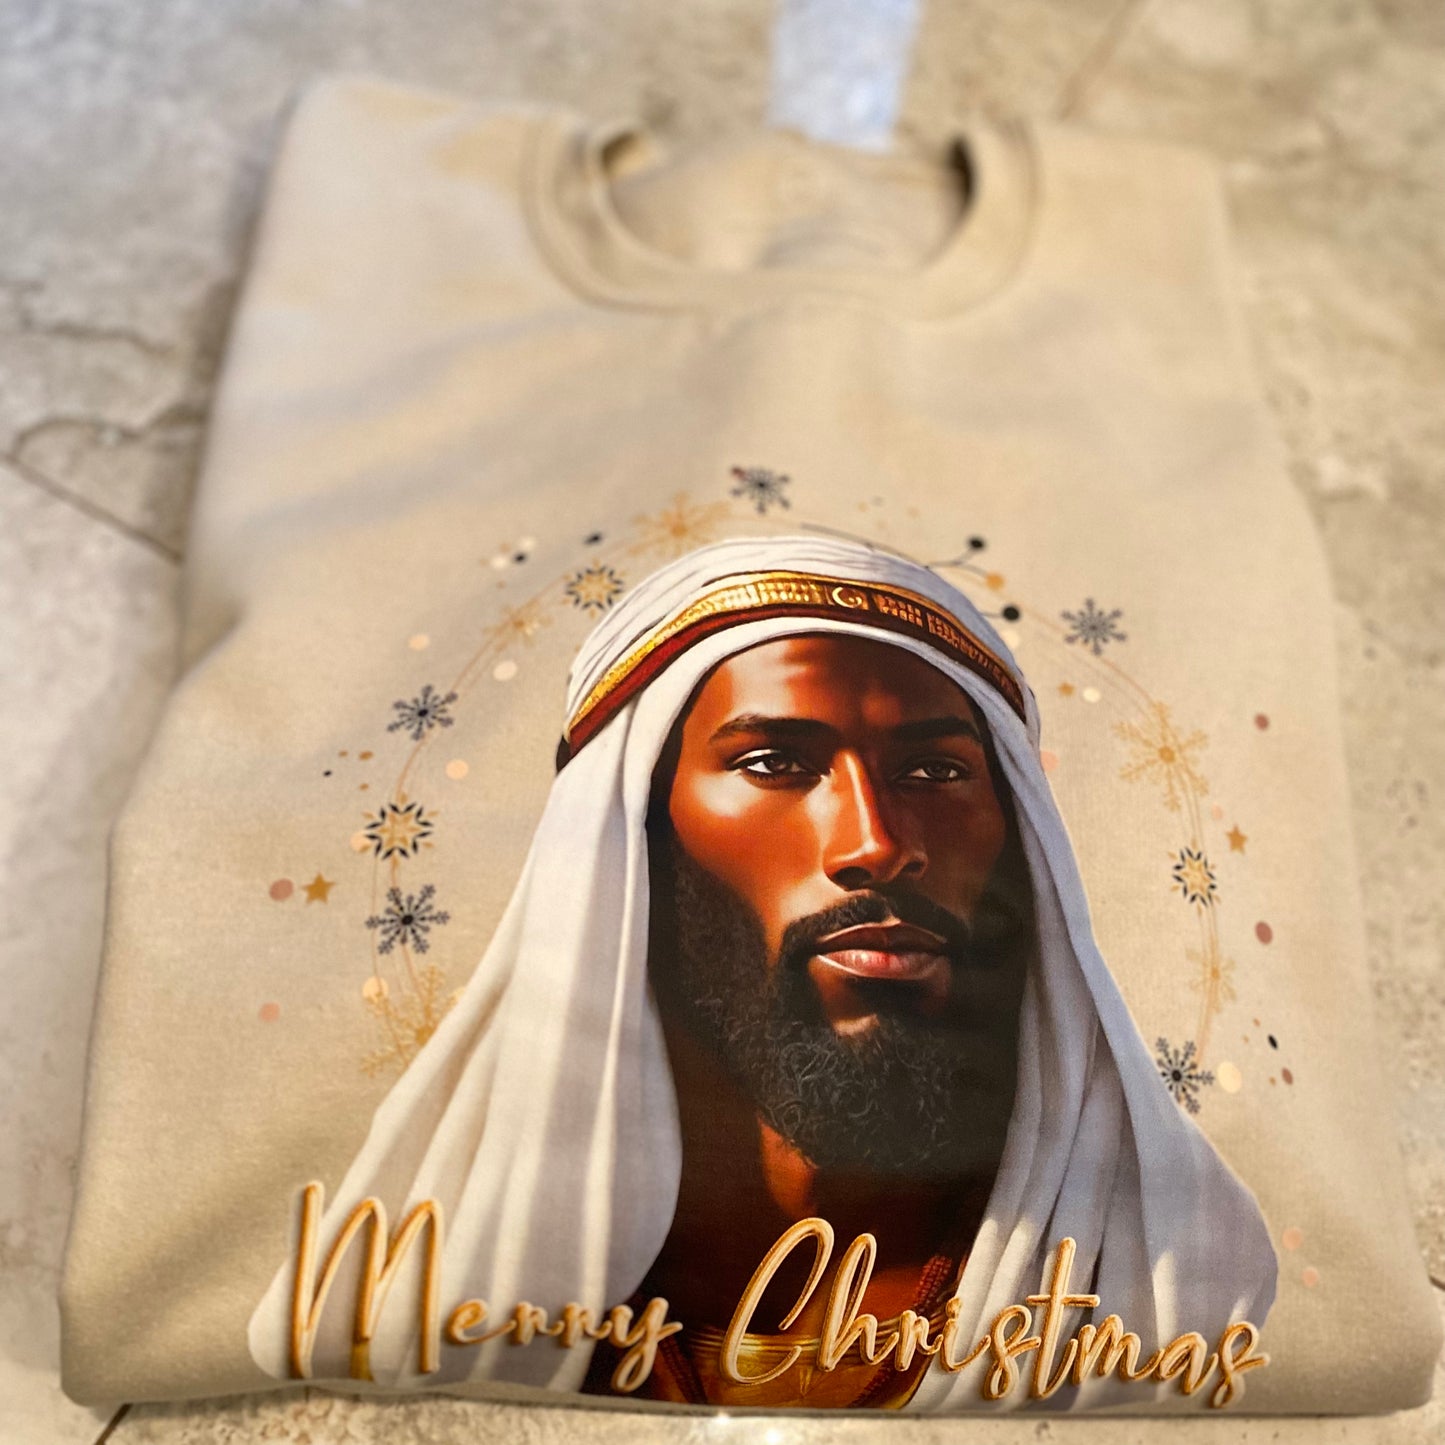 Black Jesus - Merry Christmas Sweatshirt